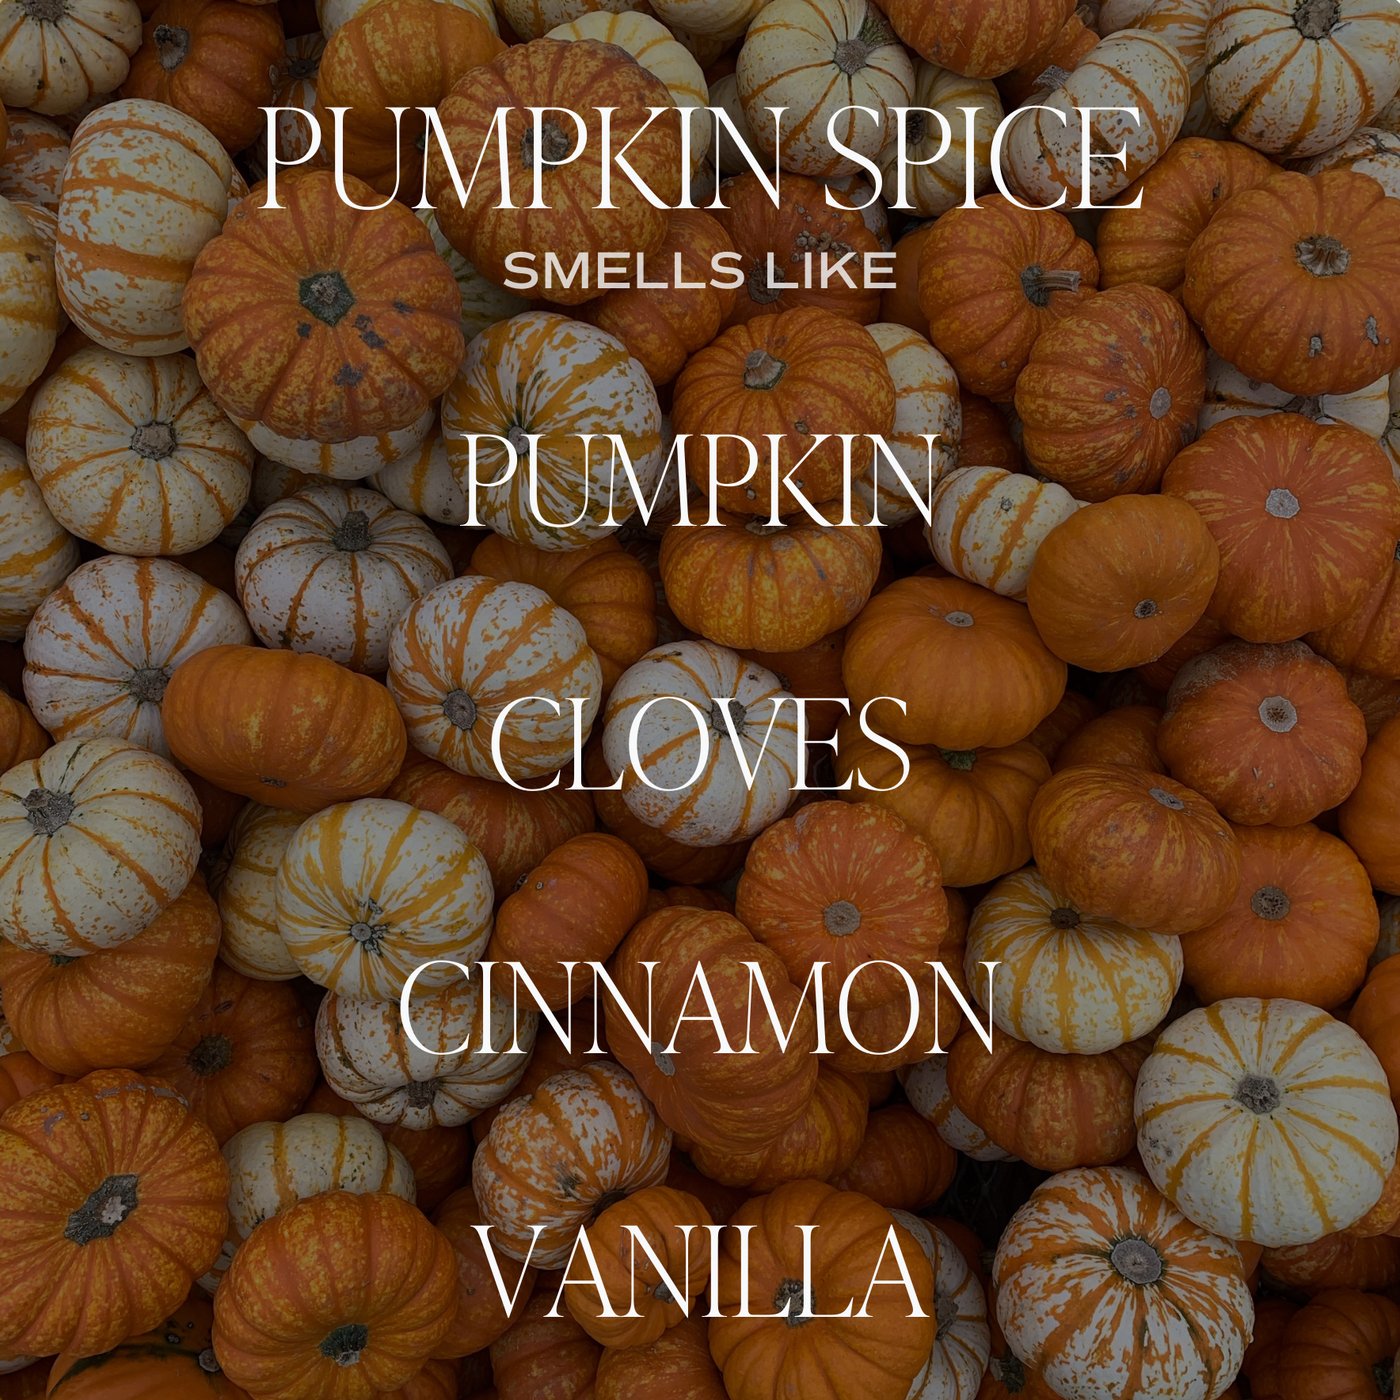 Pumpkin Spice Soy Candle - Orange Matte Jar - 15 oz